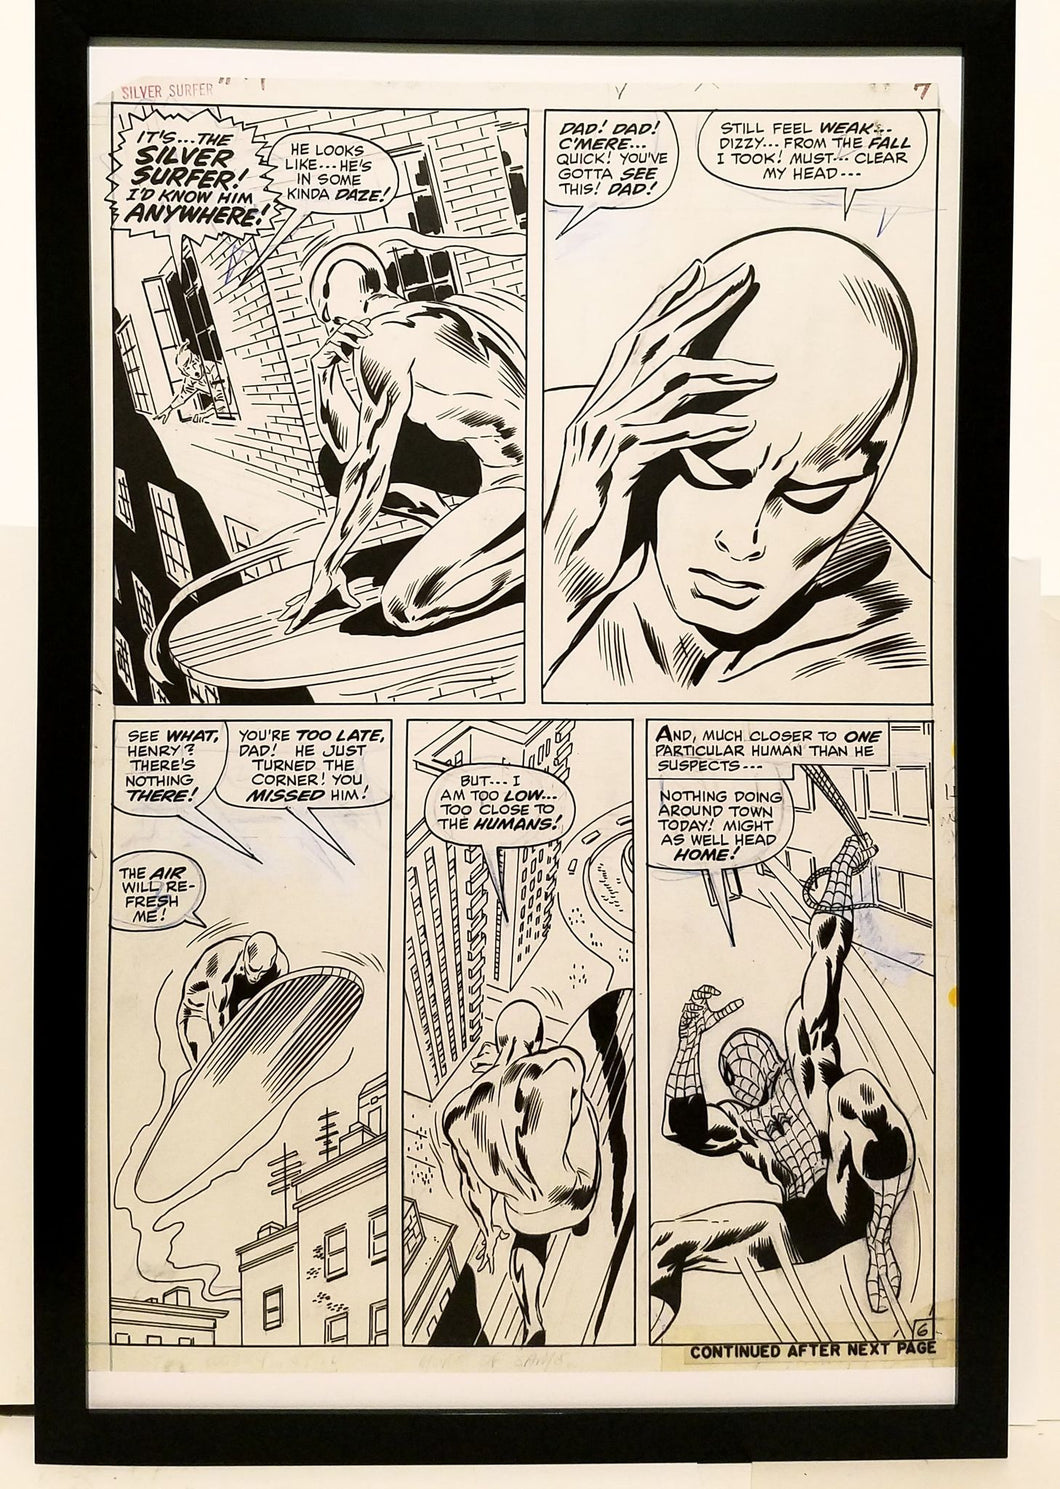 Silver Surfer #14 pg. 6 by John Buscema 11x17 FRAMED Original Art Poster Marvel Comics